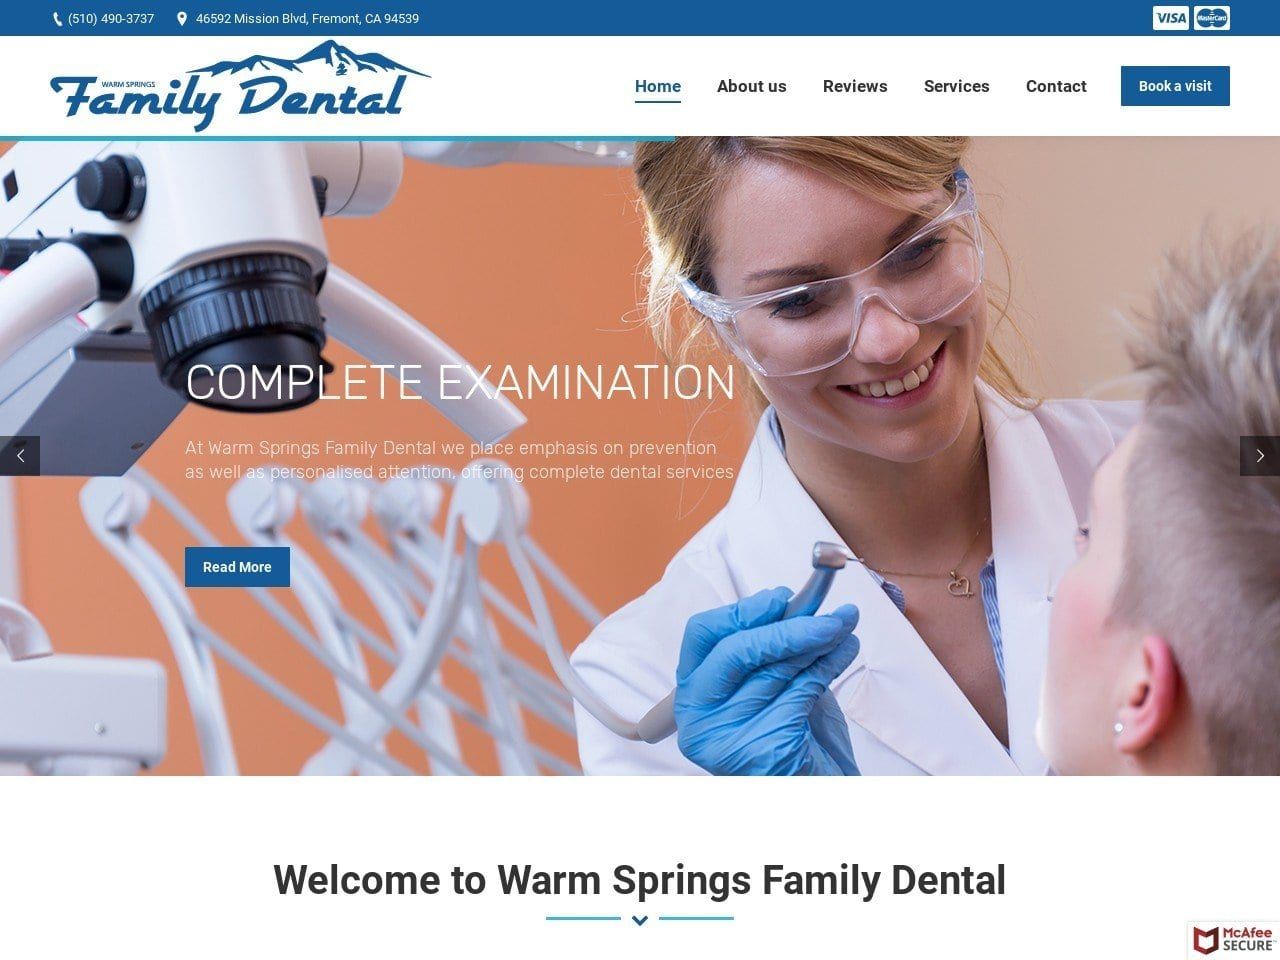 Warm Springs Family Dental Website Screenshot from warmspringsfamilydental.com